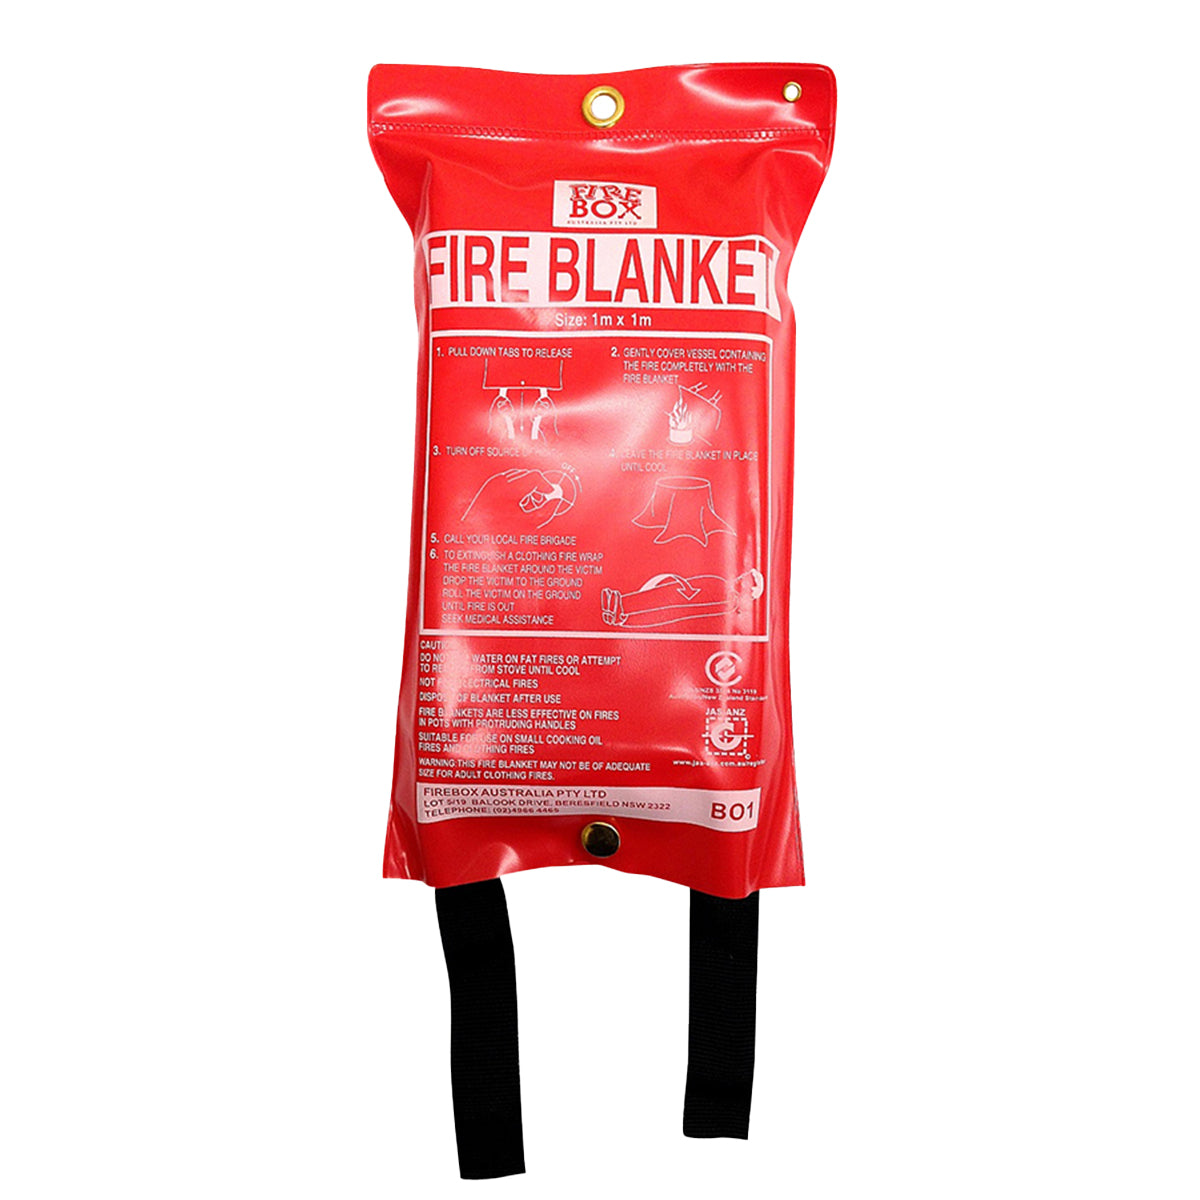 1m x 1m Fire Blanket - Premium Fire Blankets from Firebox - Shop now at Firebox Australia